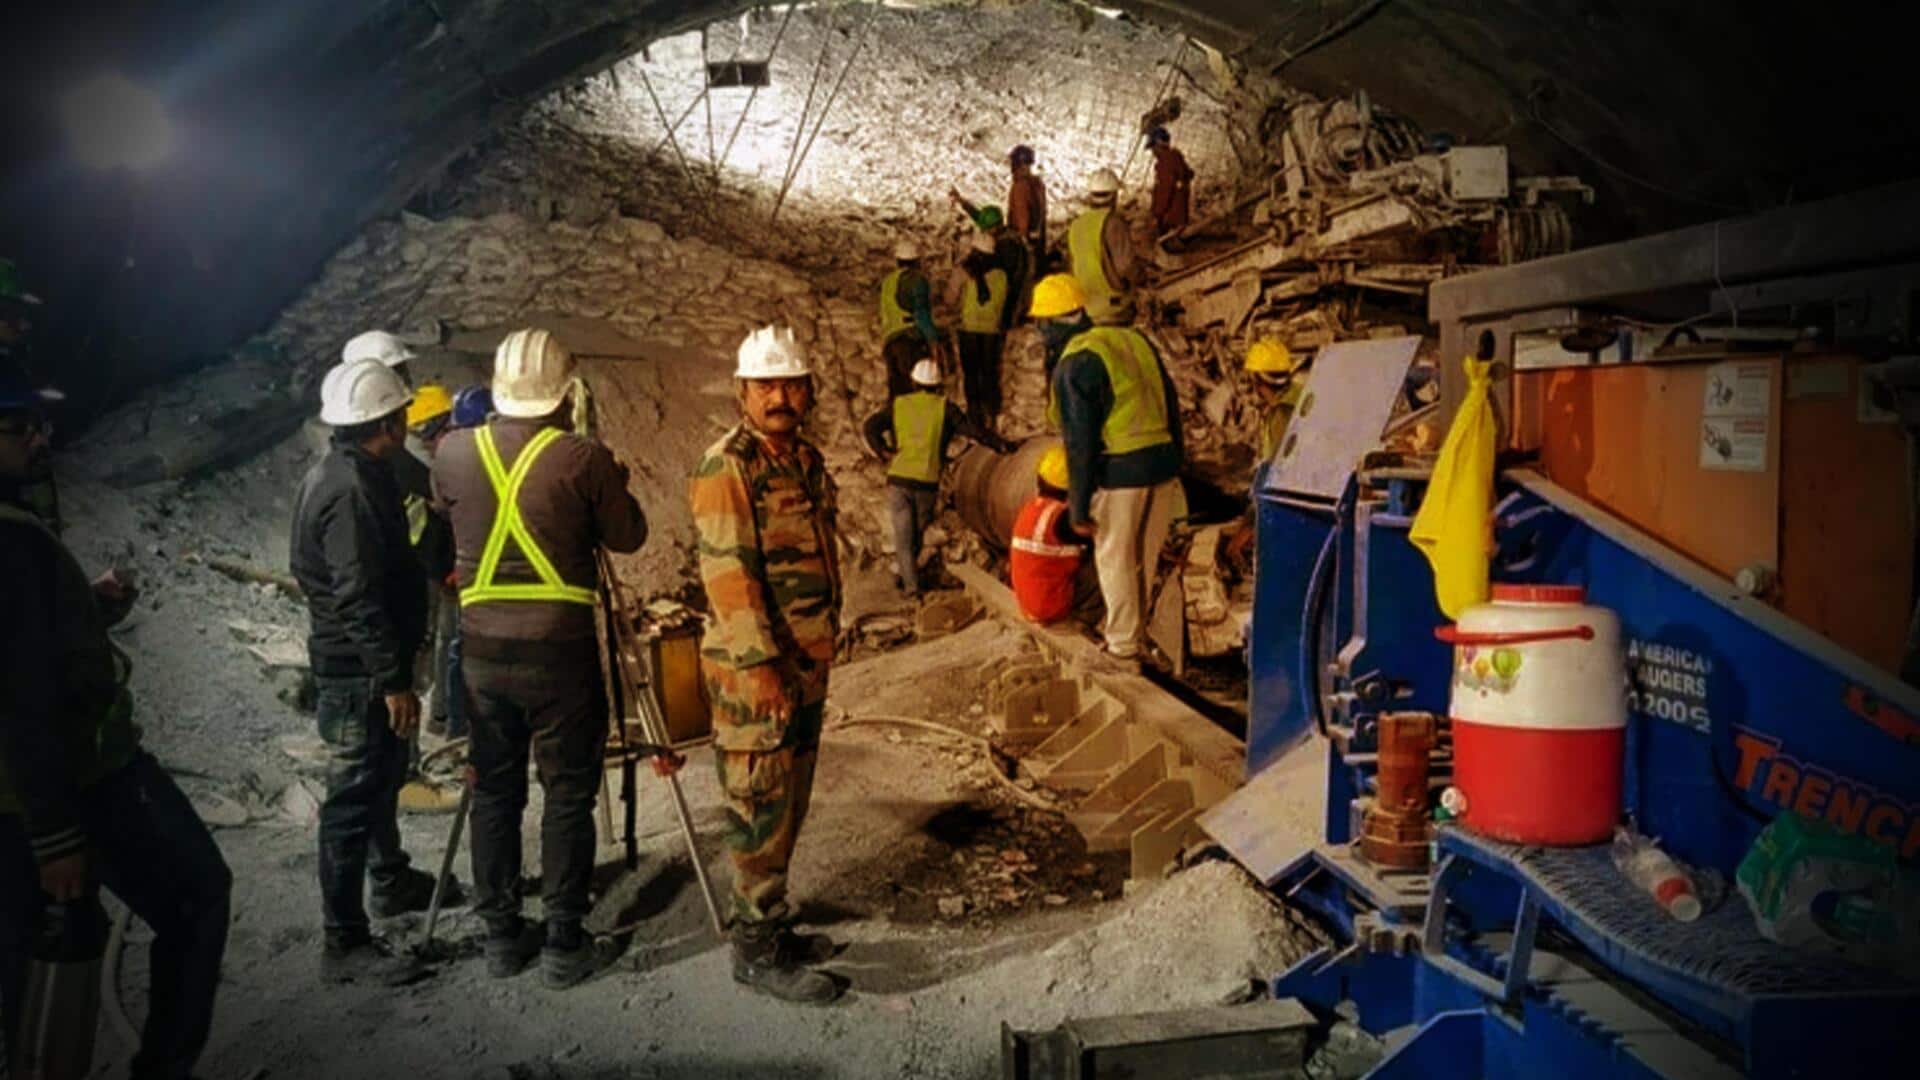 Uttarakhand Tunnel : అతి త్వరలో సొరంగం నుంచి బయటకు రానున్న కార్మికులు.. ముగింపు దశగా చేరుకున్న రెస్క్యూ ఆపరేషన్